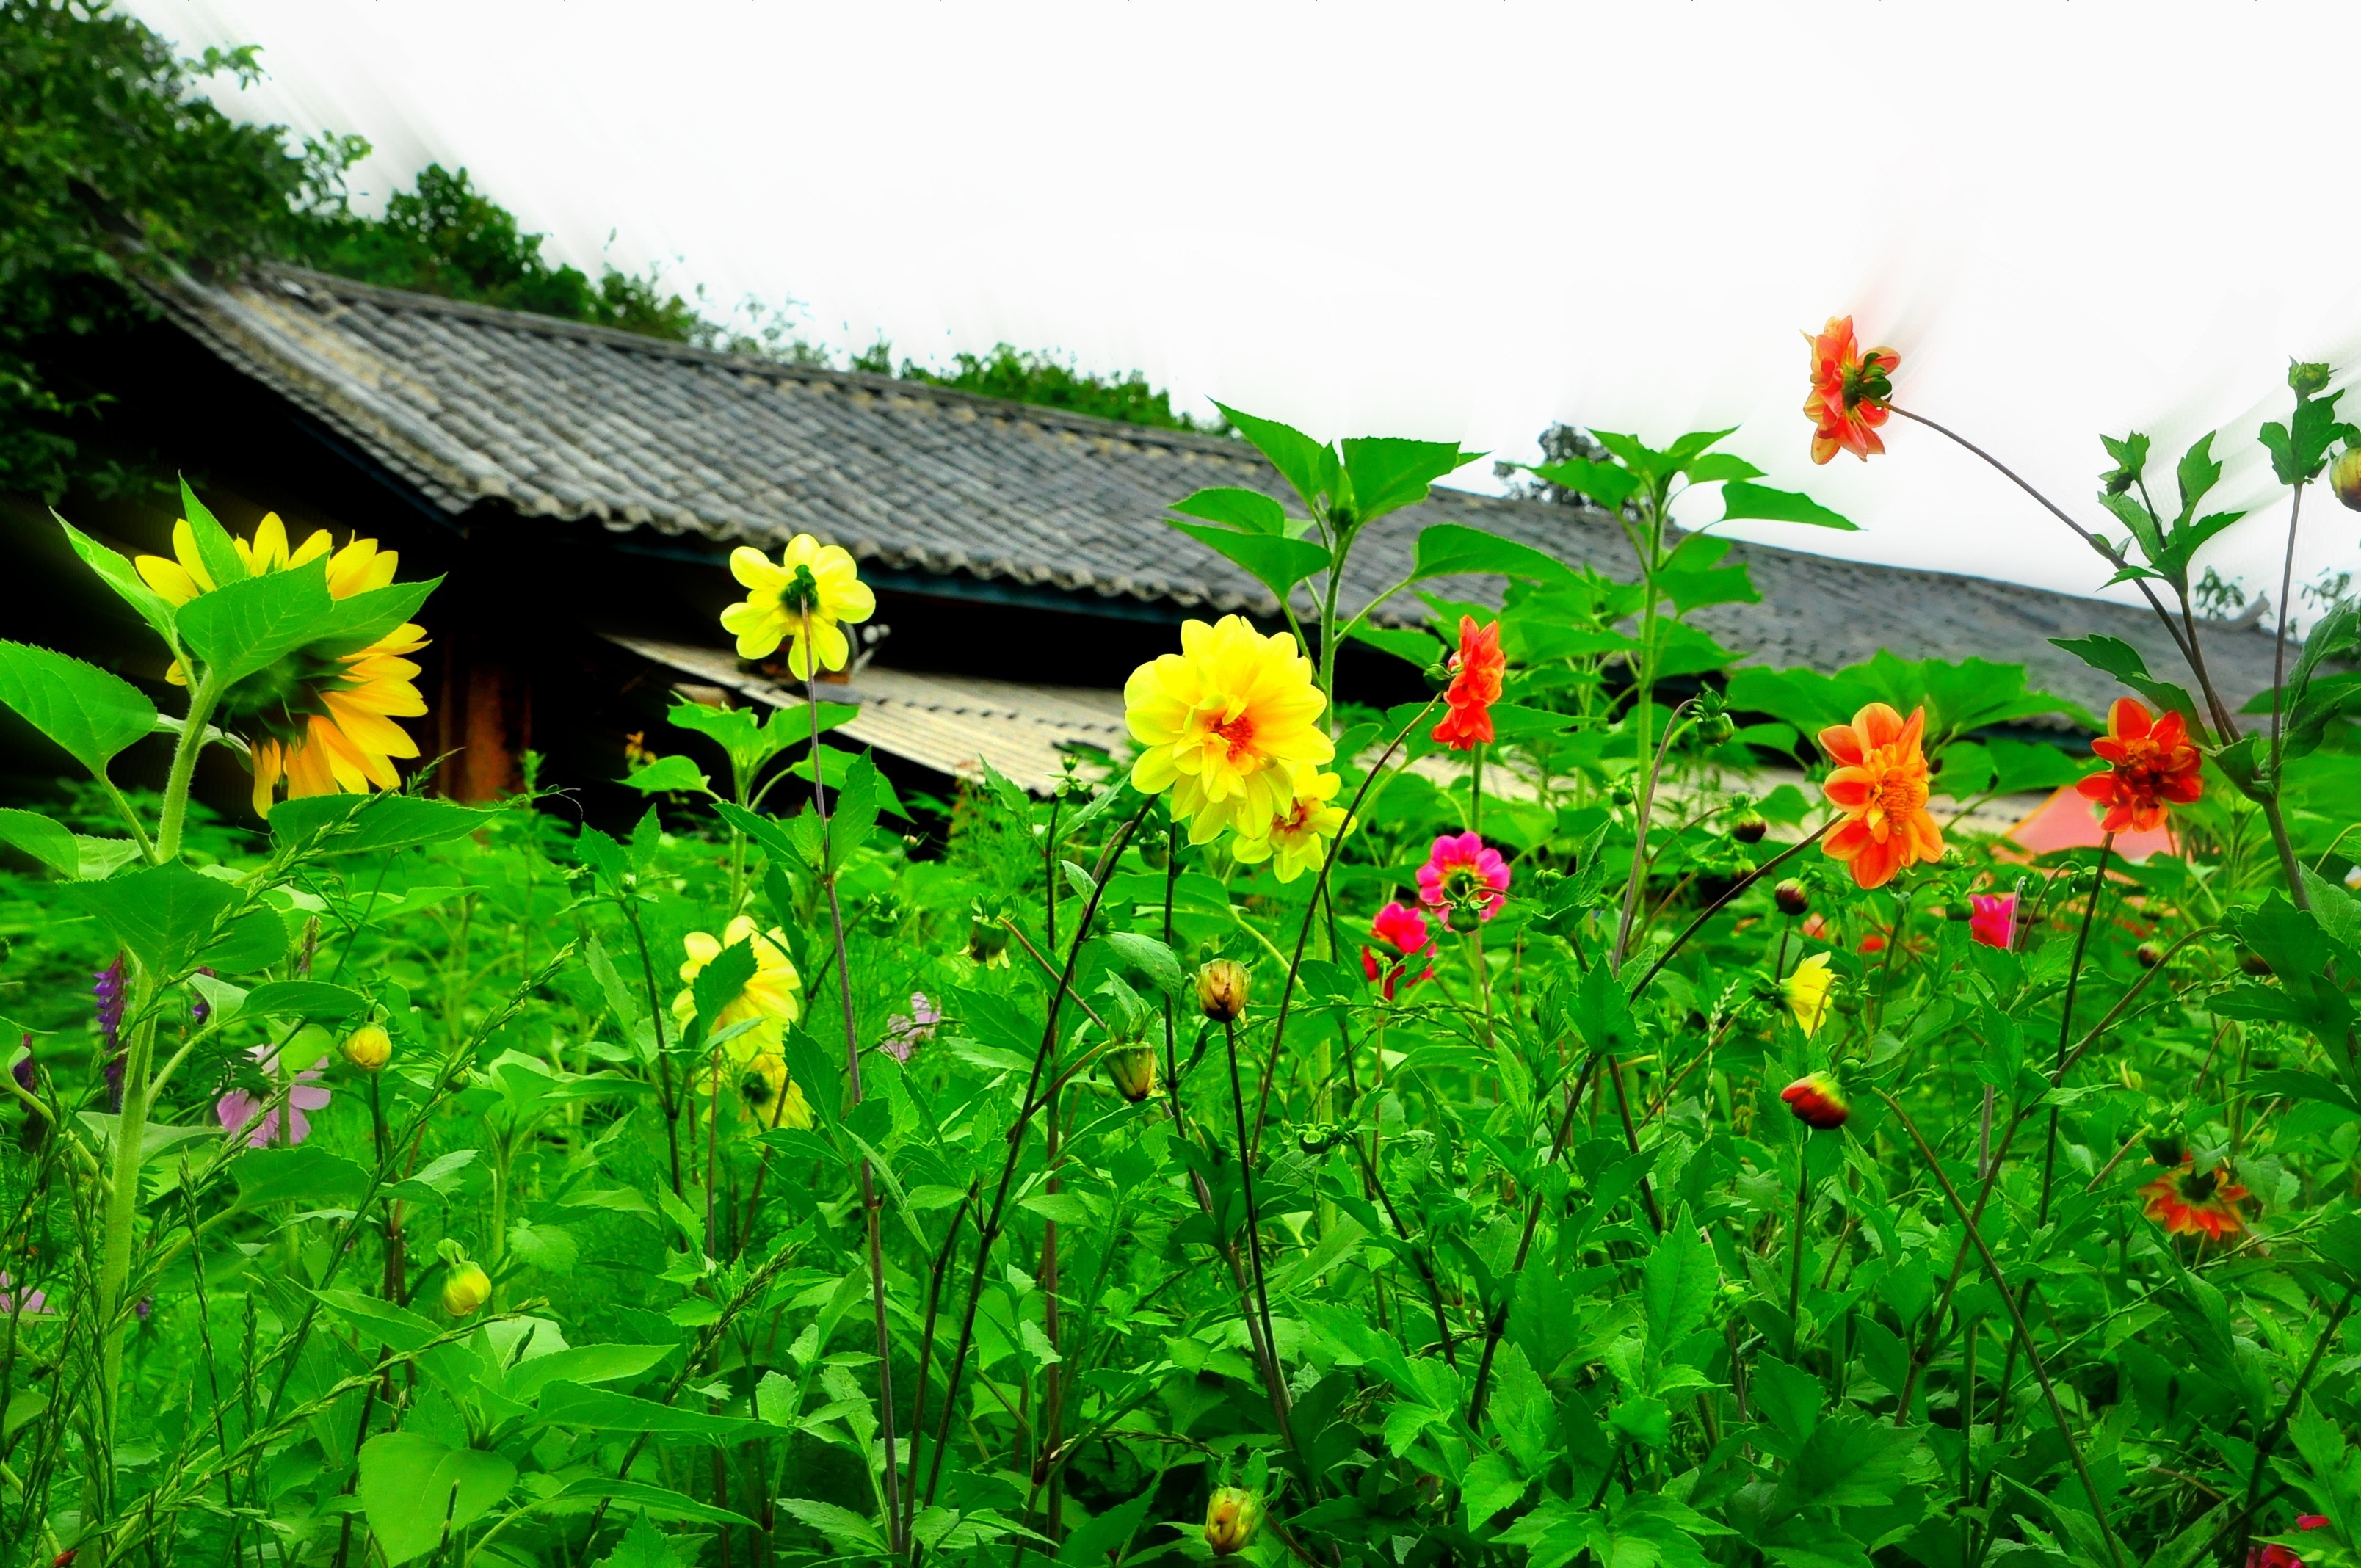 flower field near house during daytime